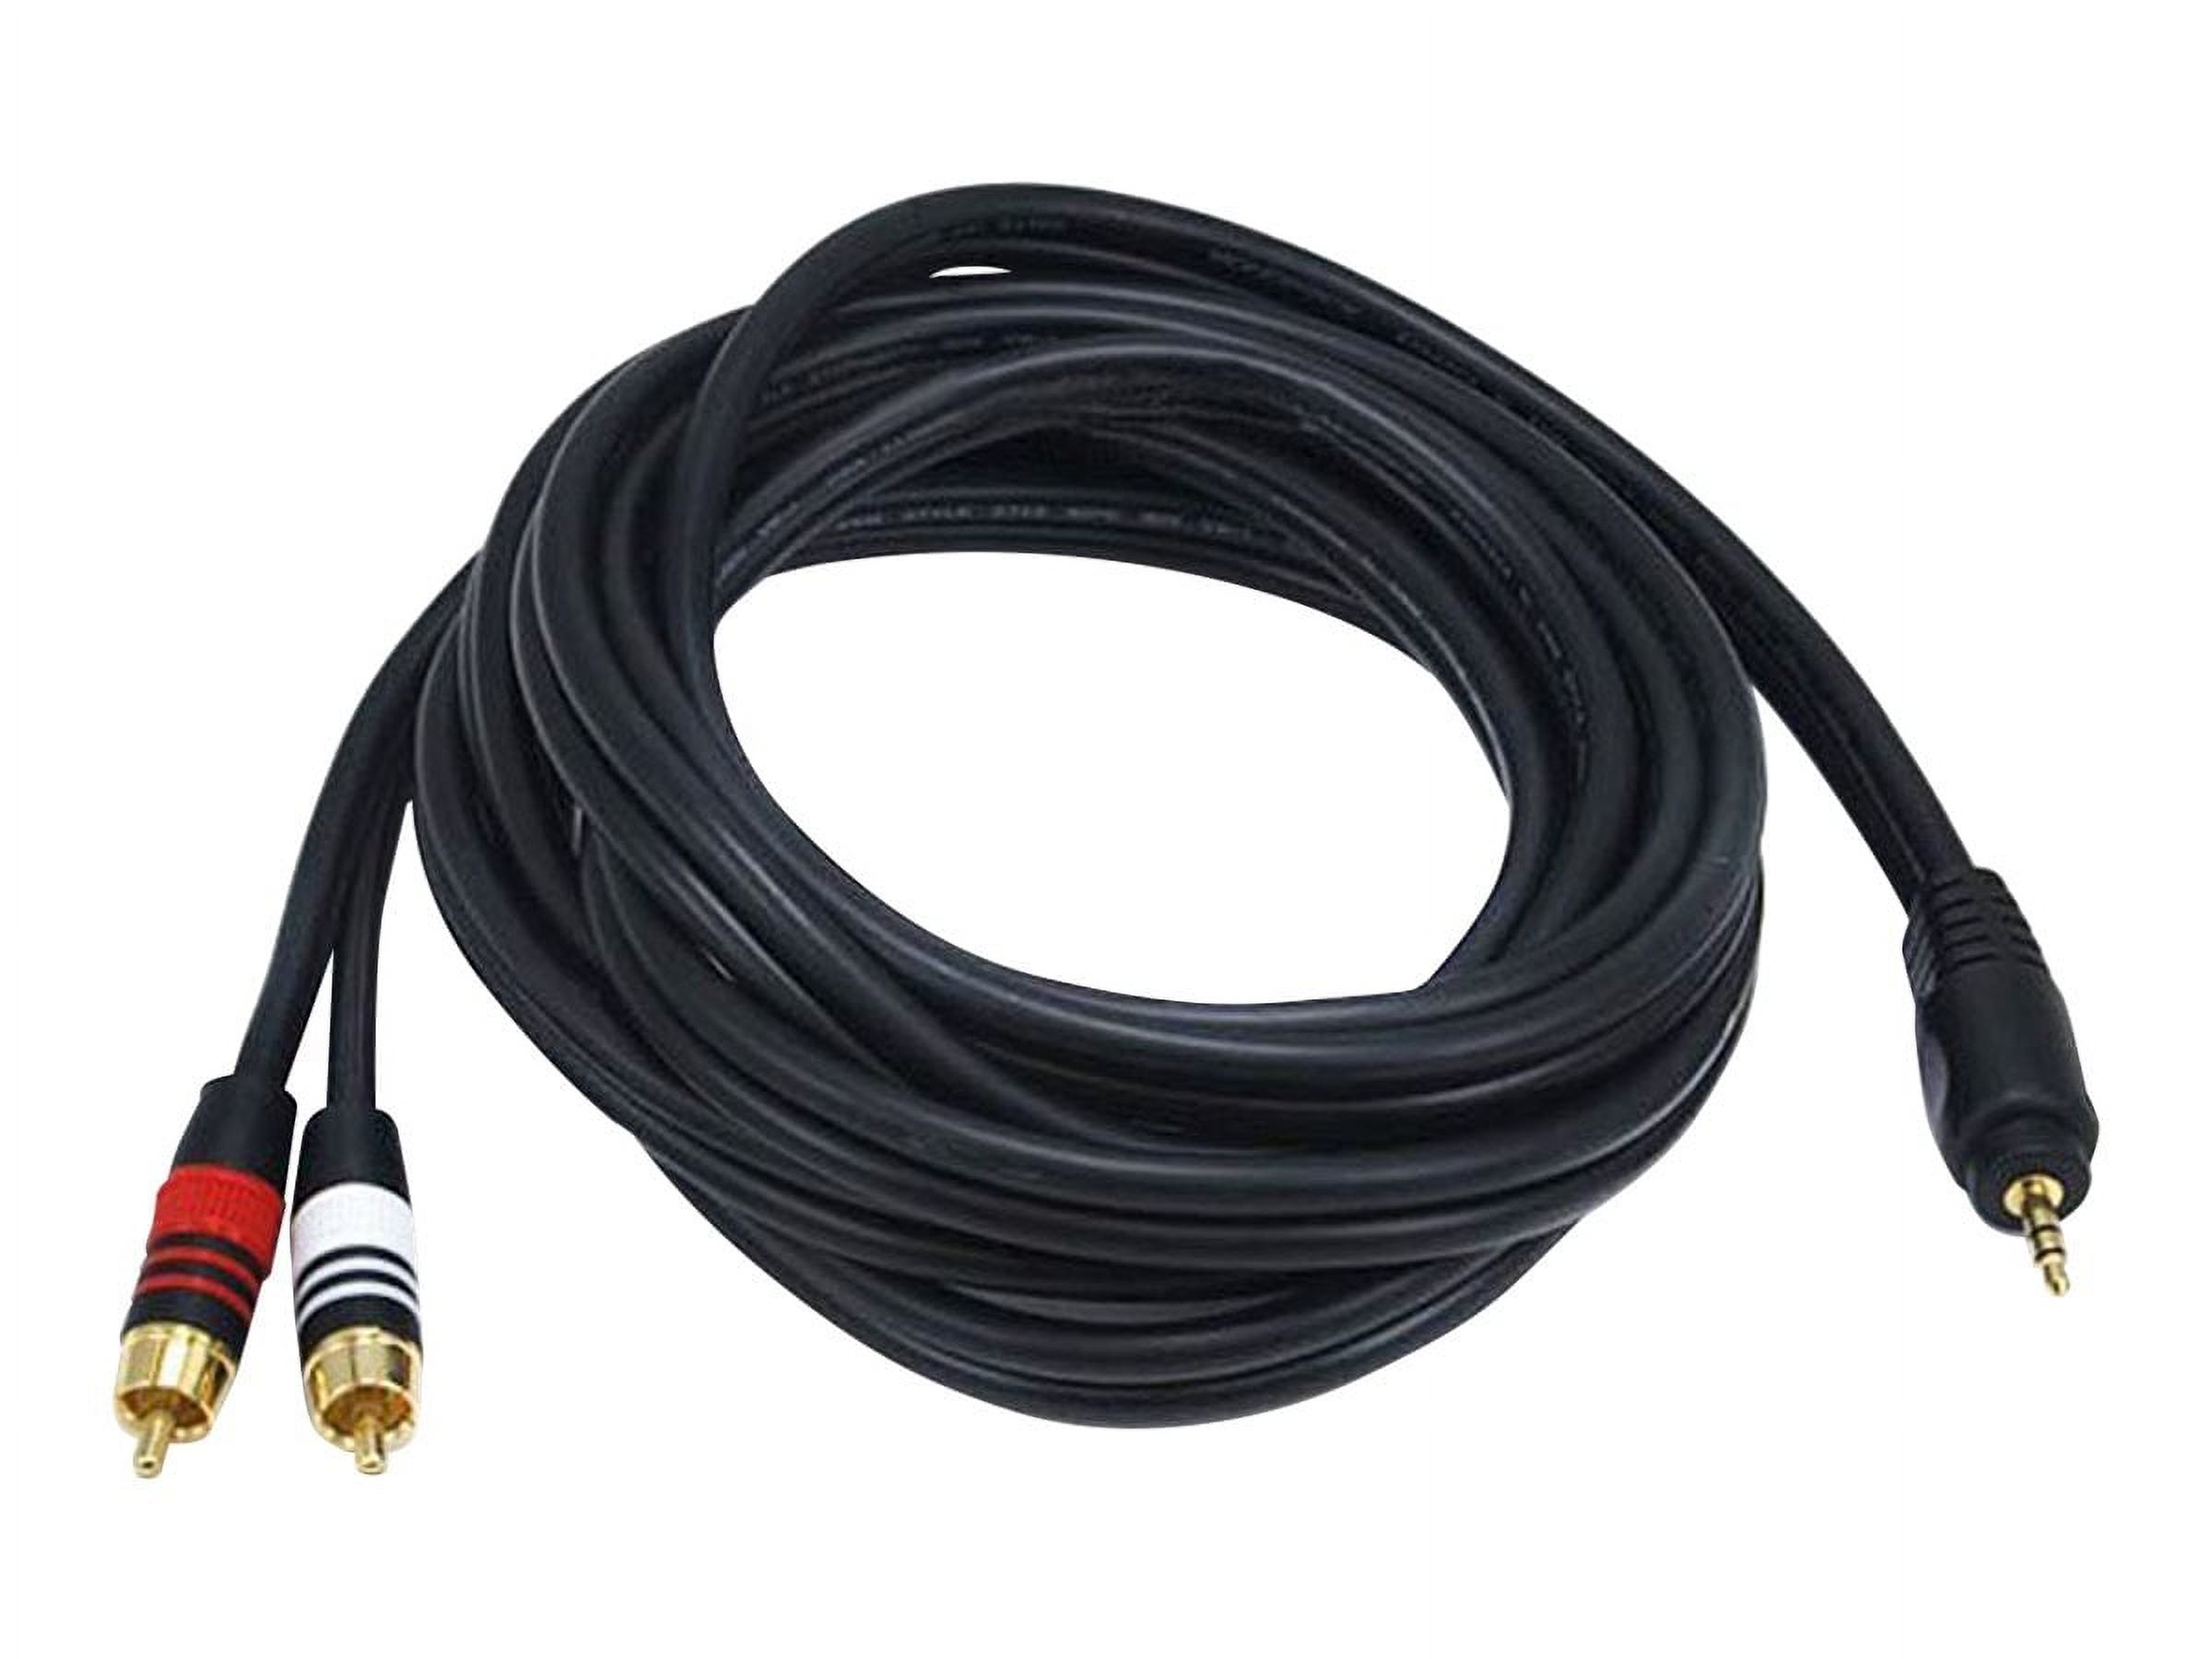 Monoprice Premium 5599 10' RCA Audio/Video Cable Black 105599 - image 1 of 4